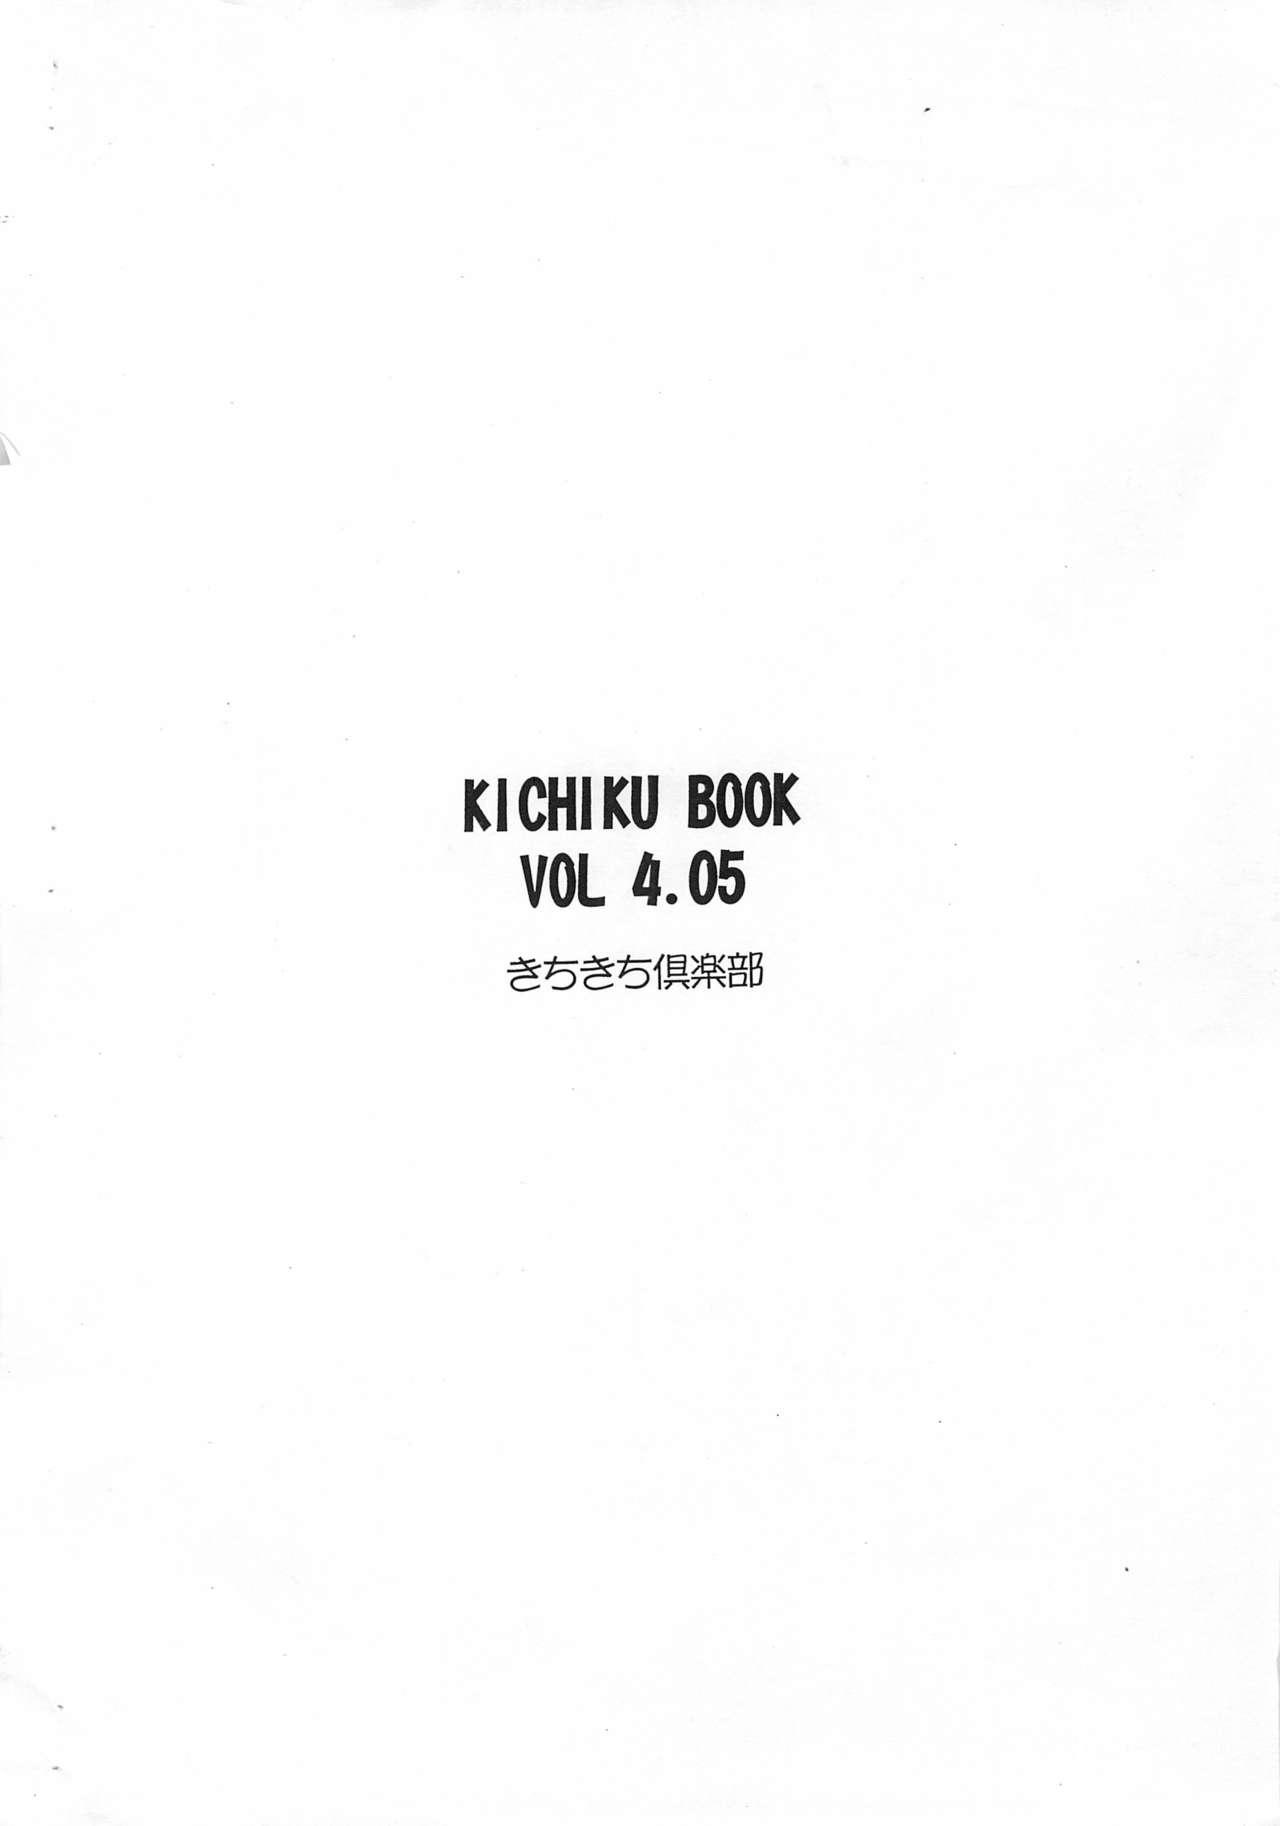 KICHIKU BOOK VOL4.05 10